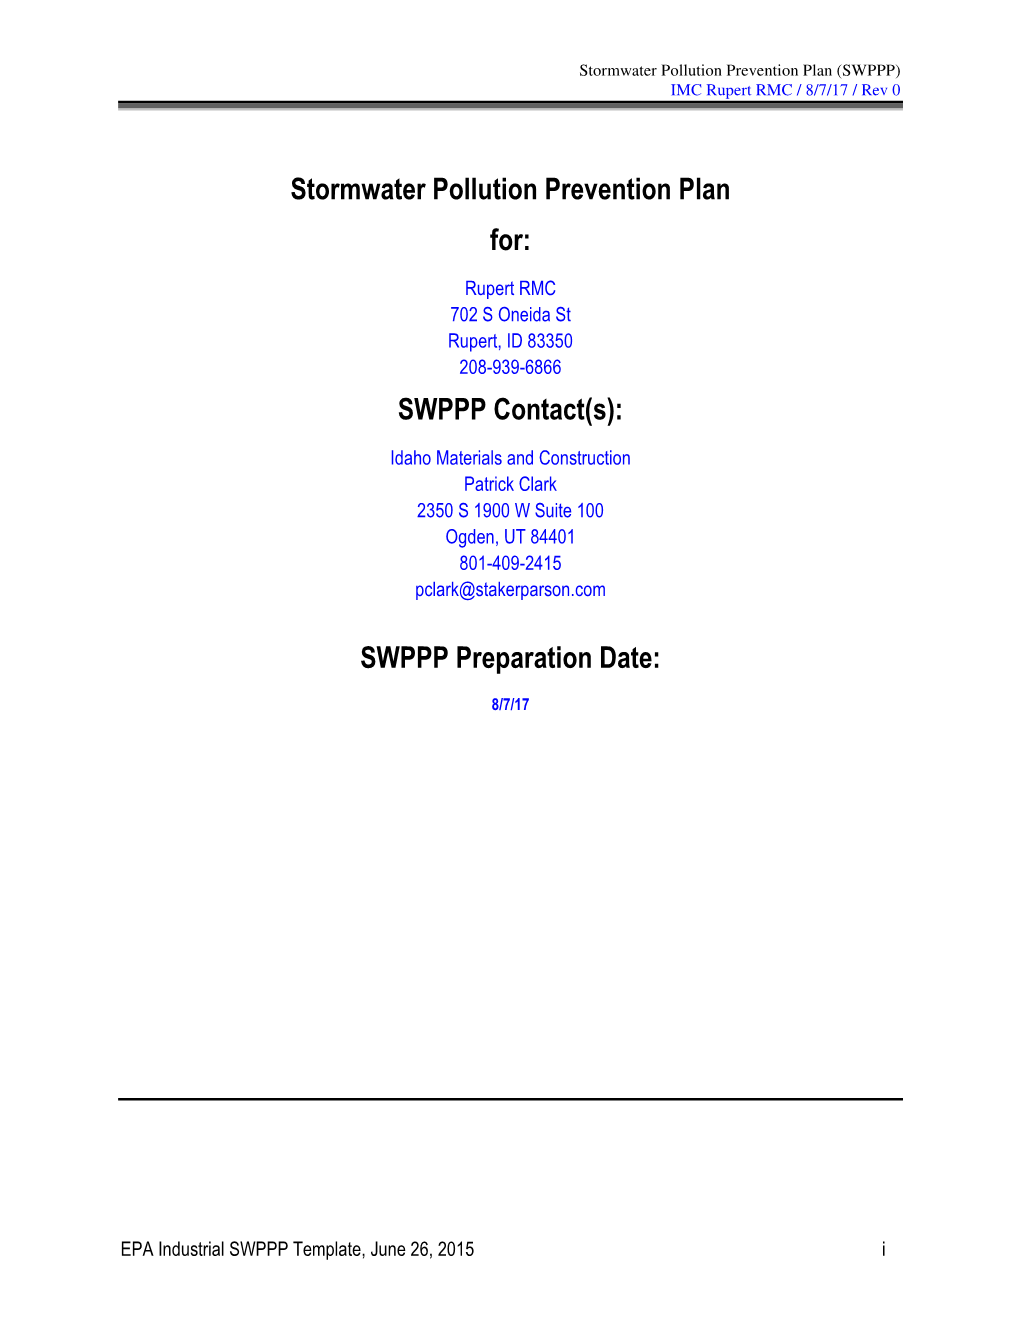 Stormwater Pollution Prevention Plan (SWPPP) IMC Rupert RMC / 8/7/17 / Rev 0